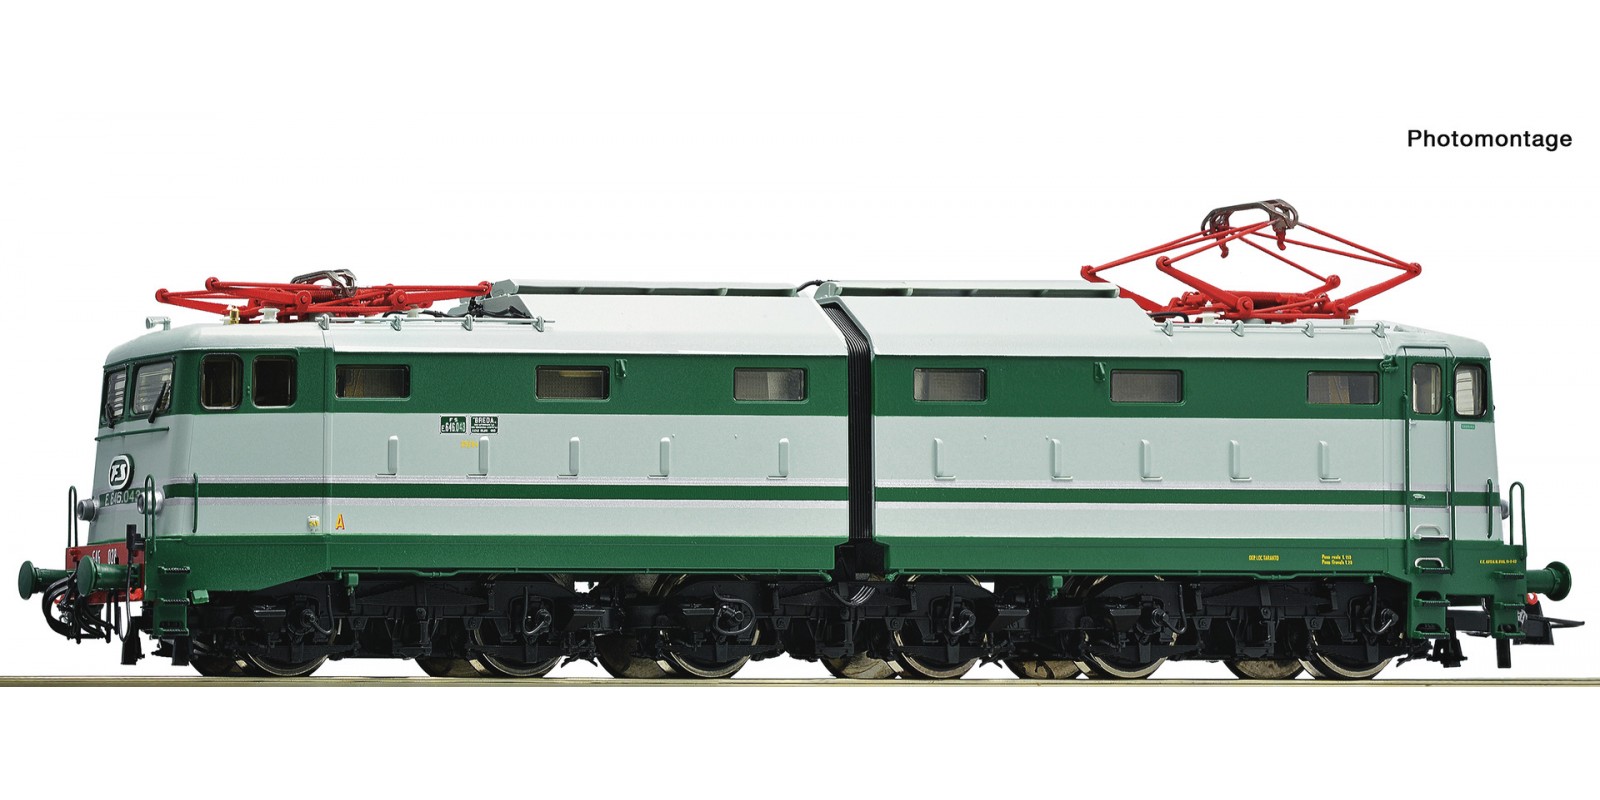 RO73164 Electric locomotive E.646.043